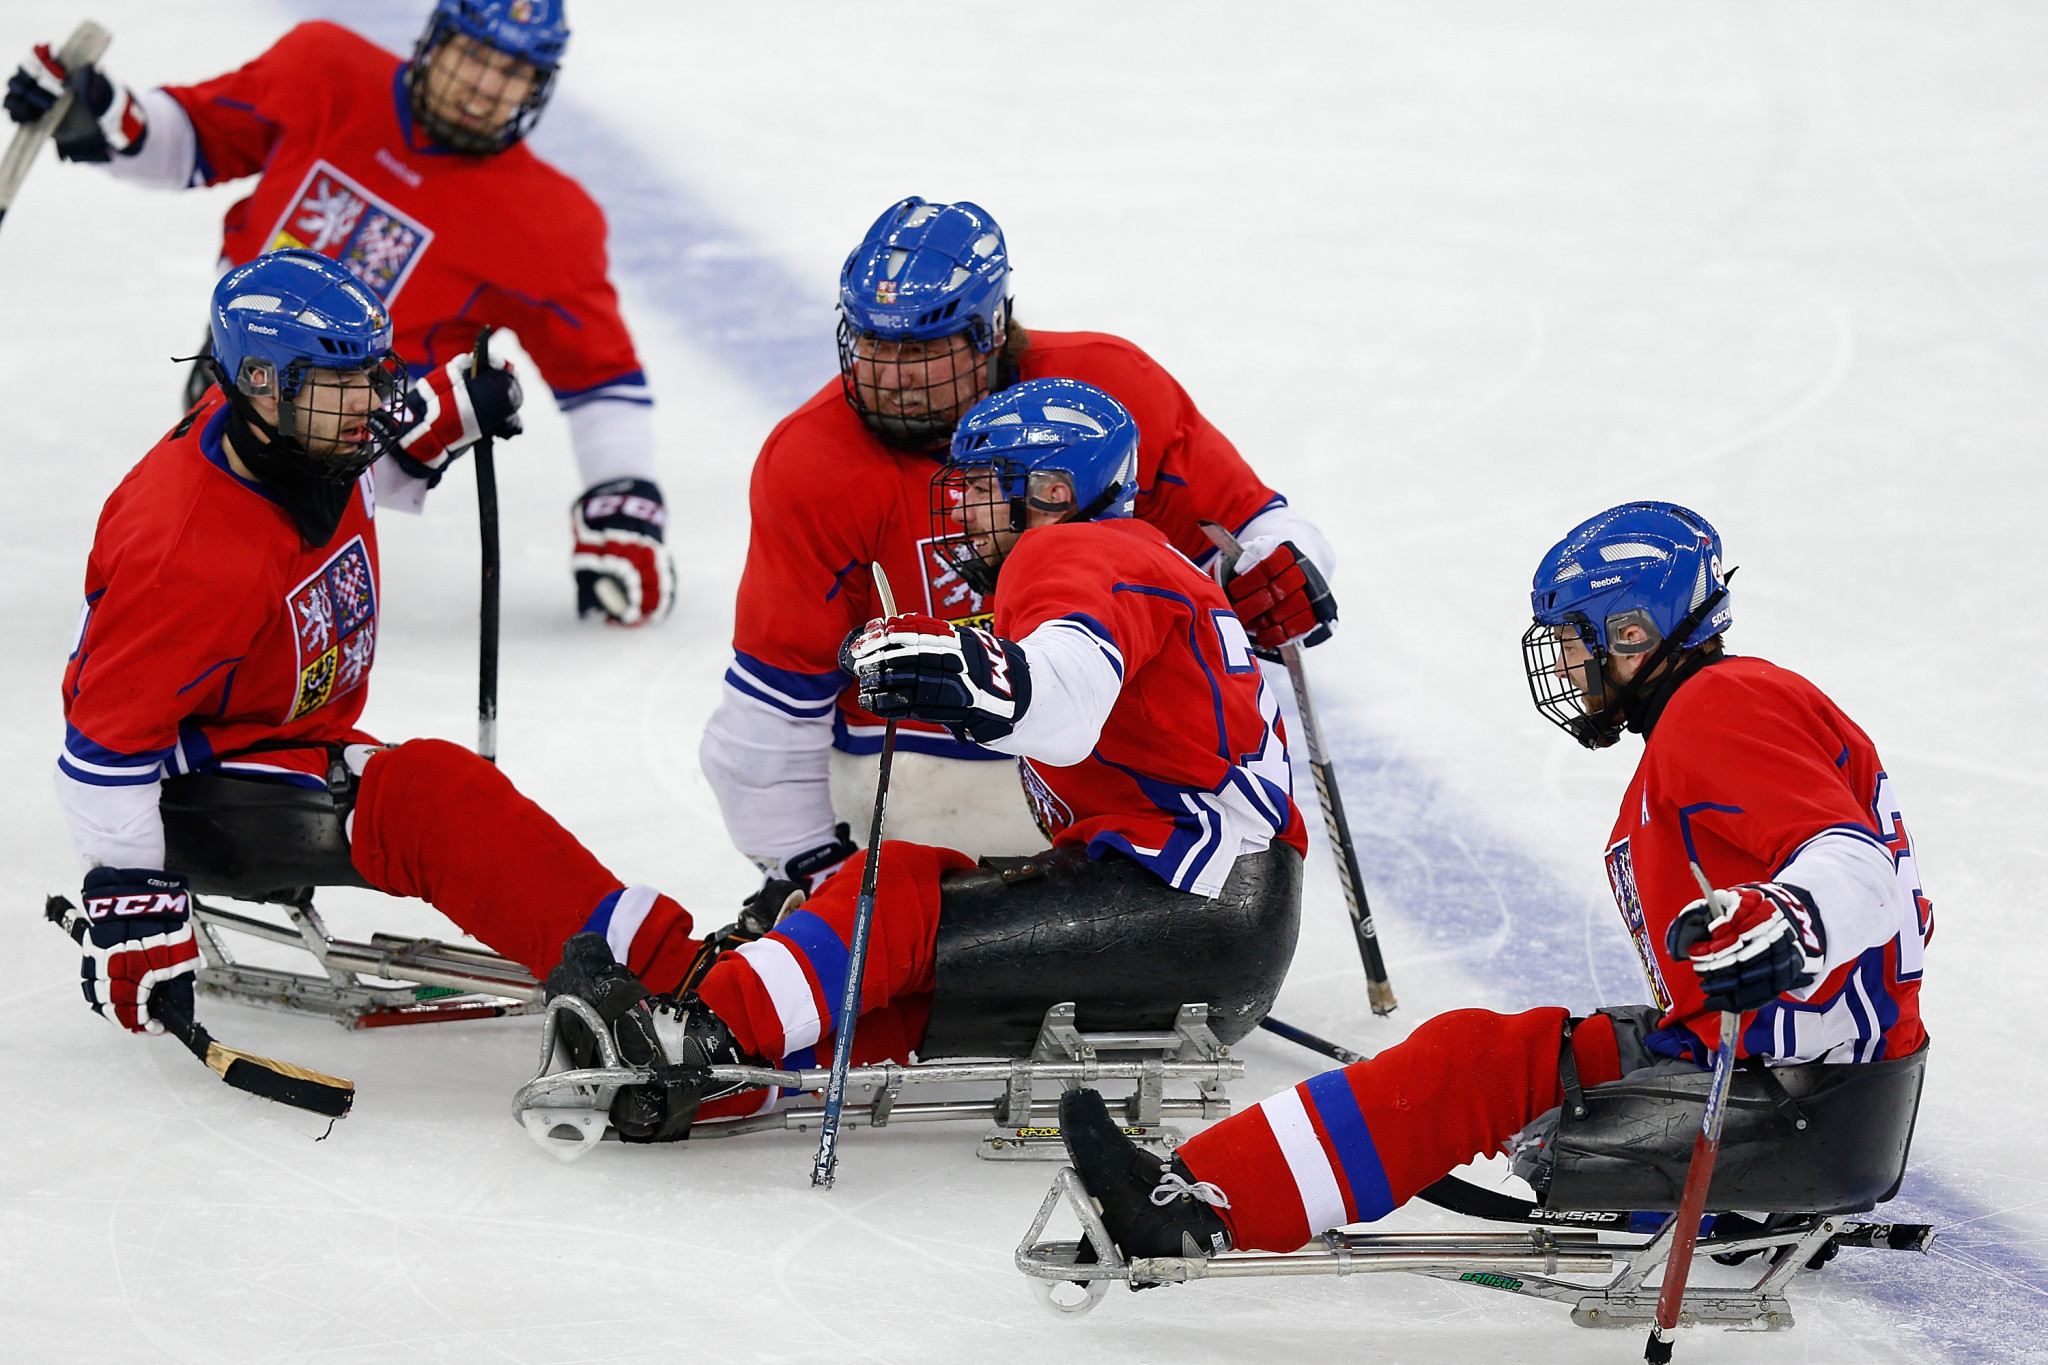 Geier headlines Czech Para ice hockey team for Beijing 2022